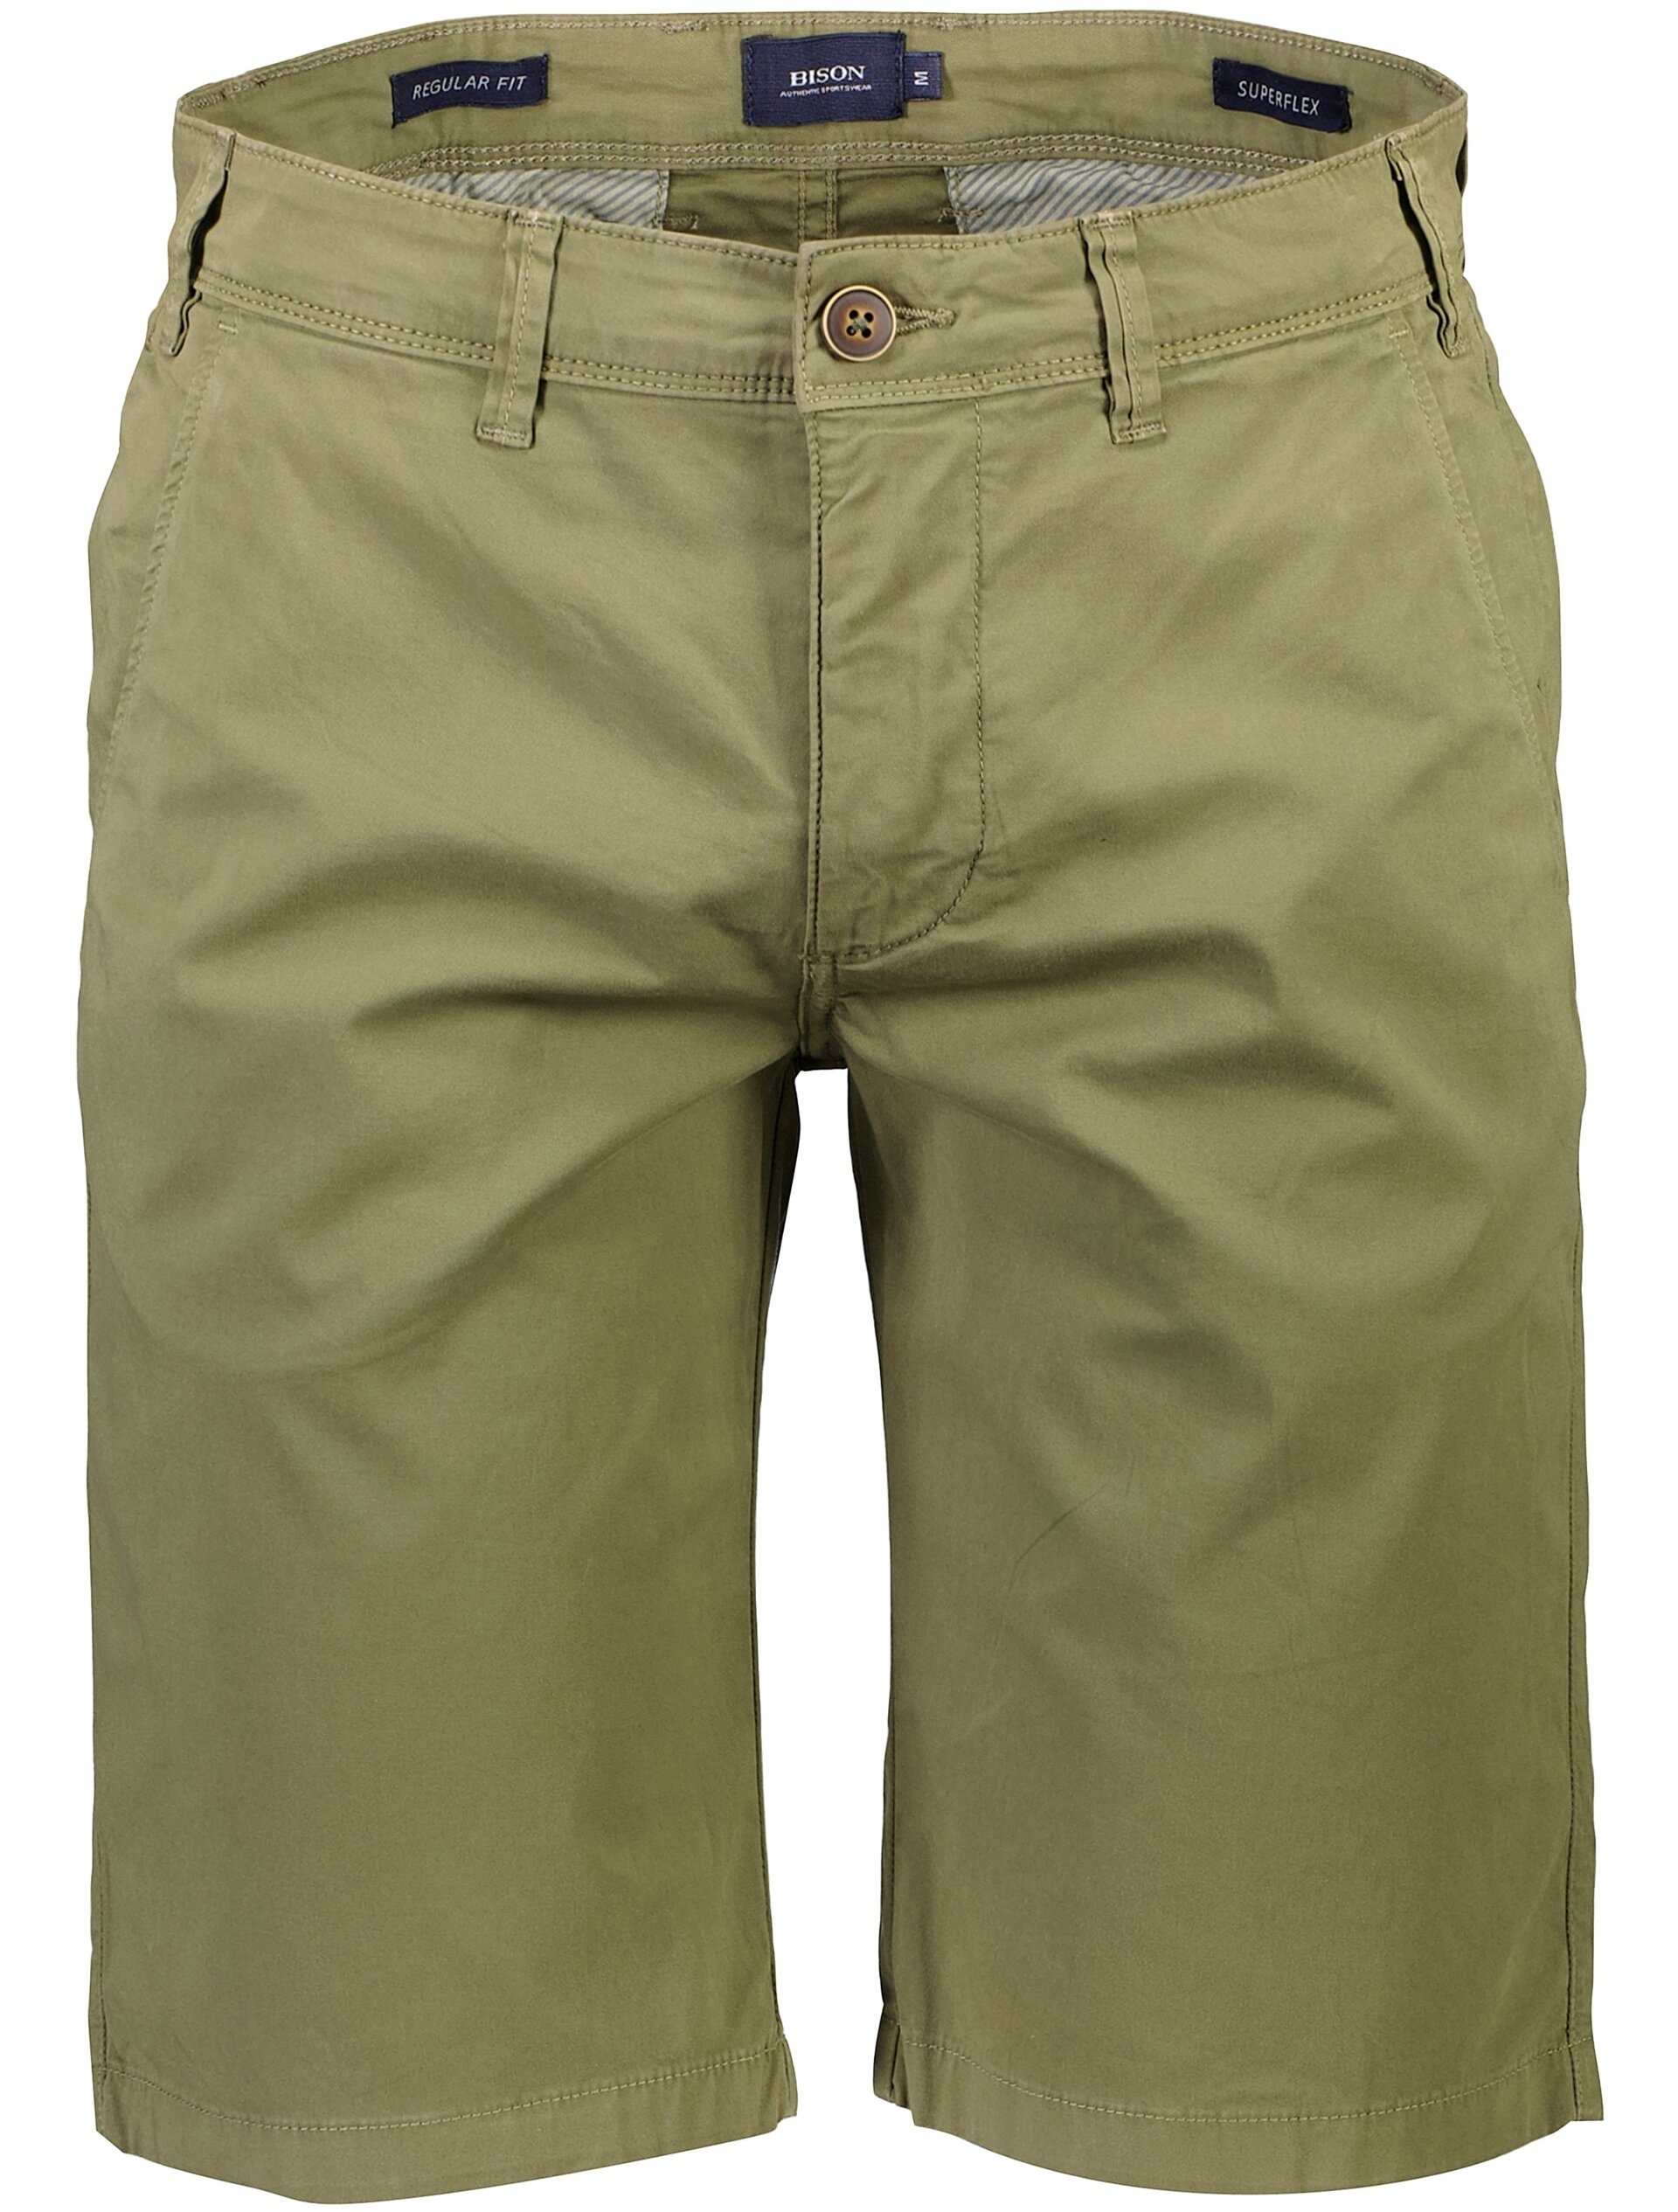 Bison Chino shorts grøn / army